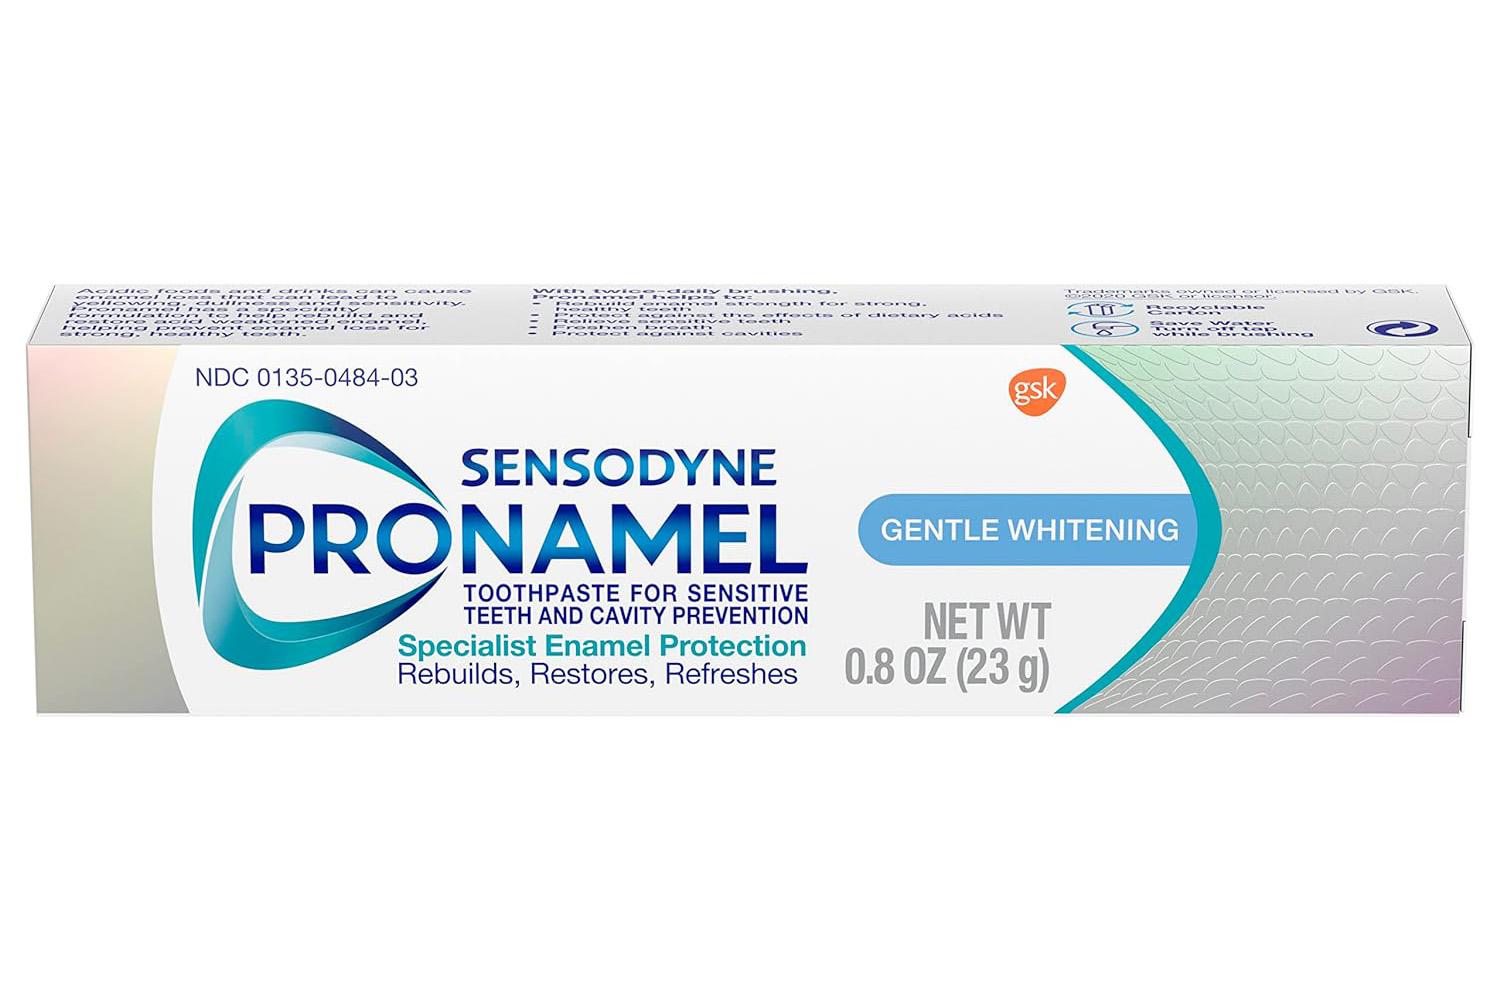 Sensodyne Pronamel Gentle Whitening Travel Size Toothpaste for $1.58